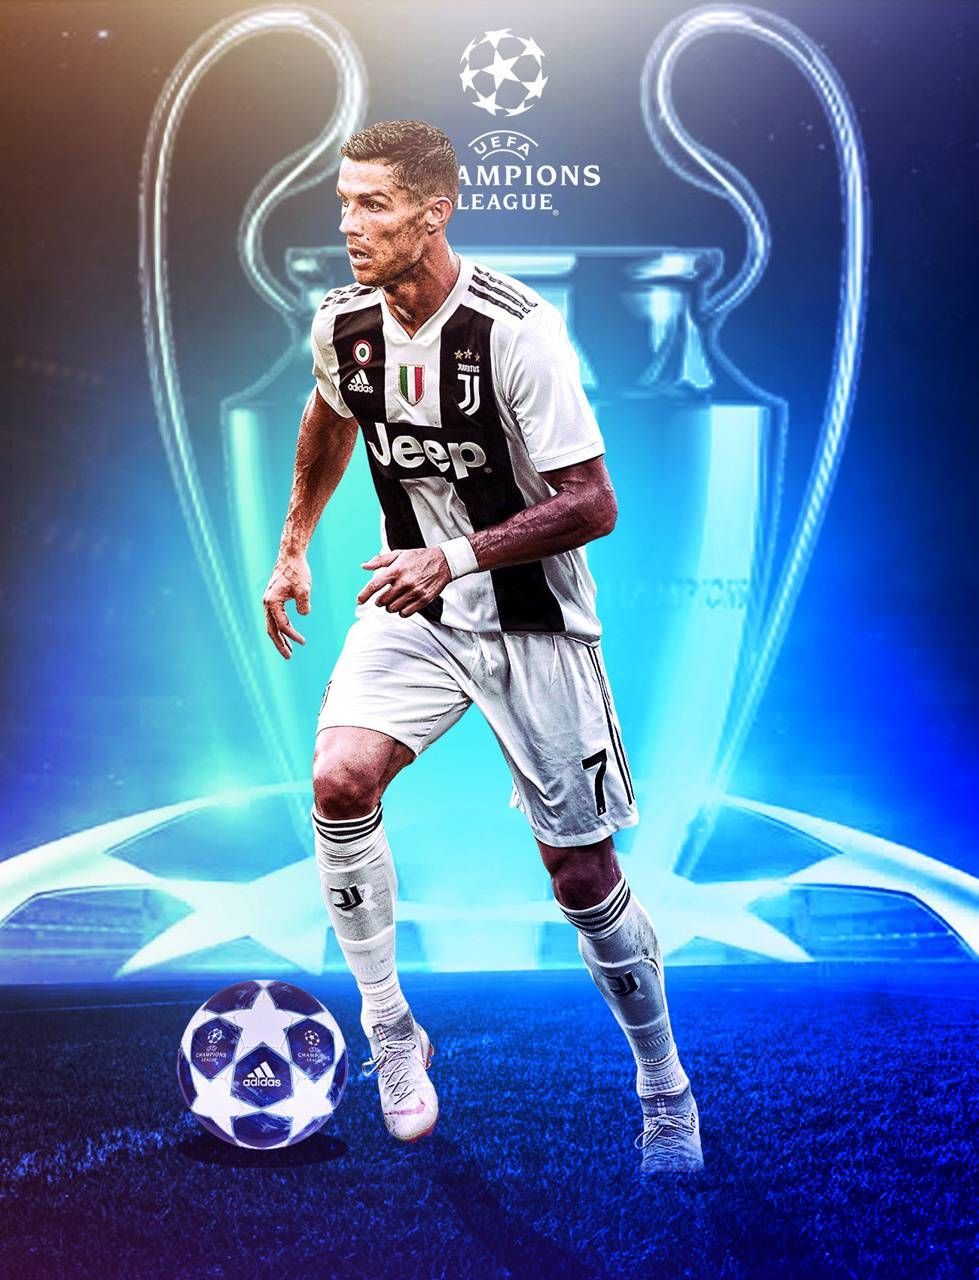 Uefa Champions League - HD Wallpaper 